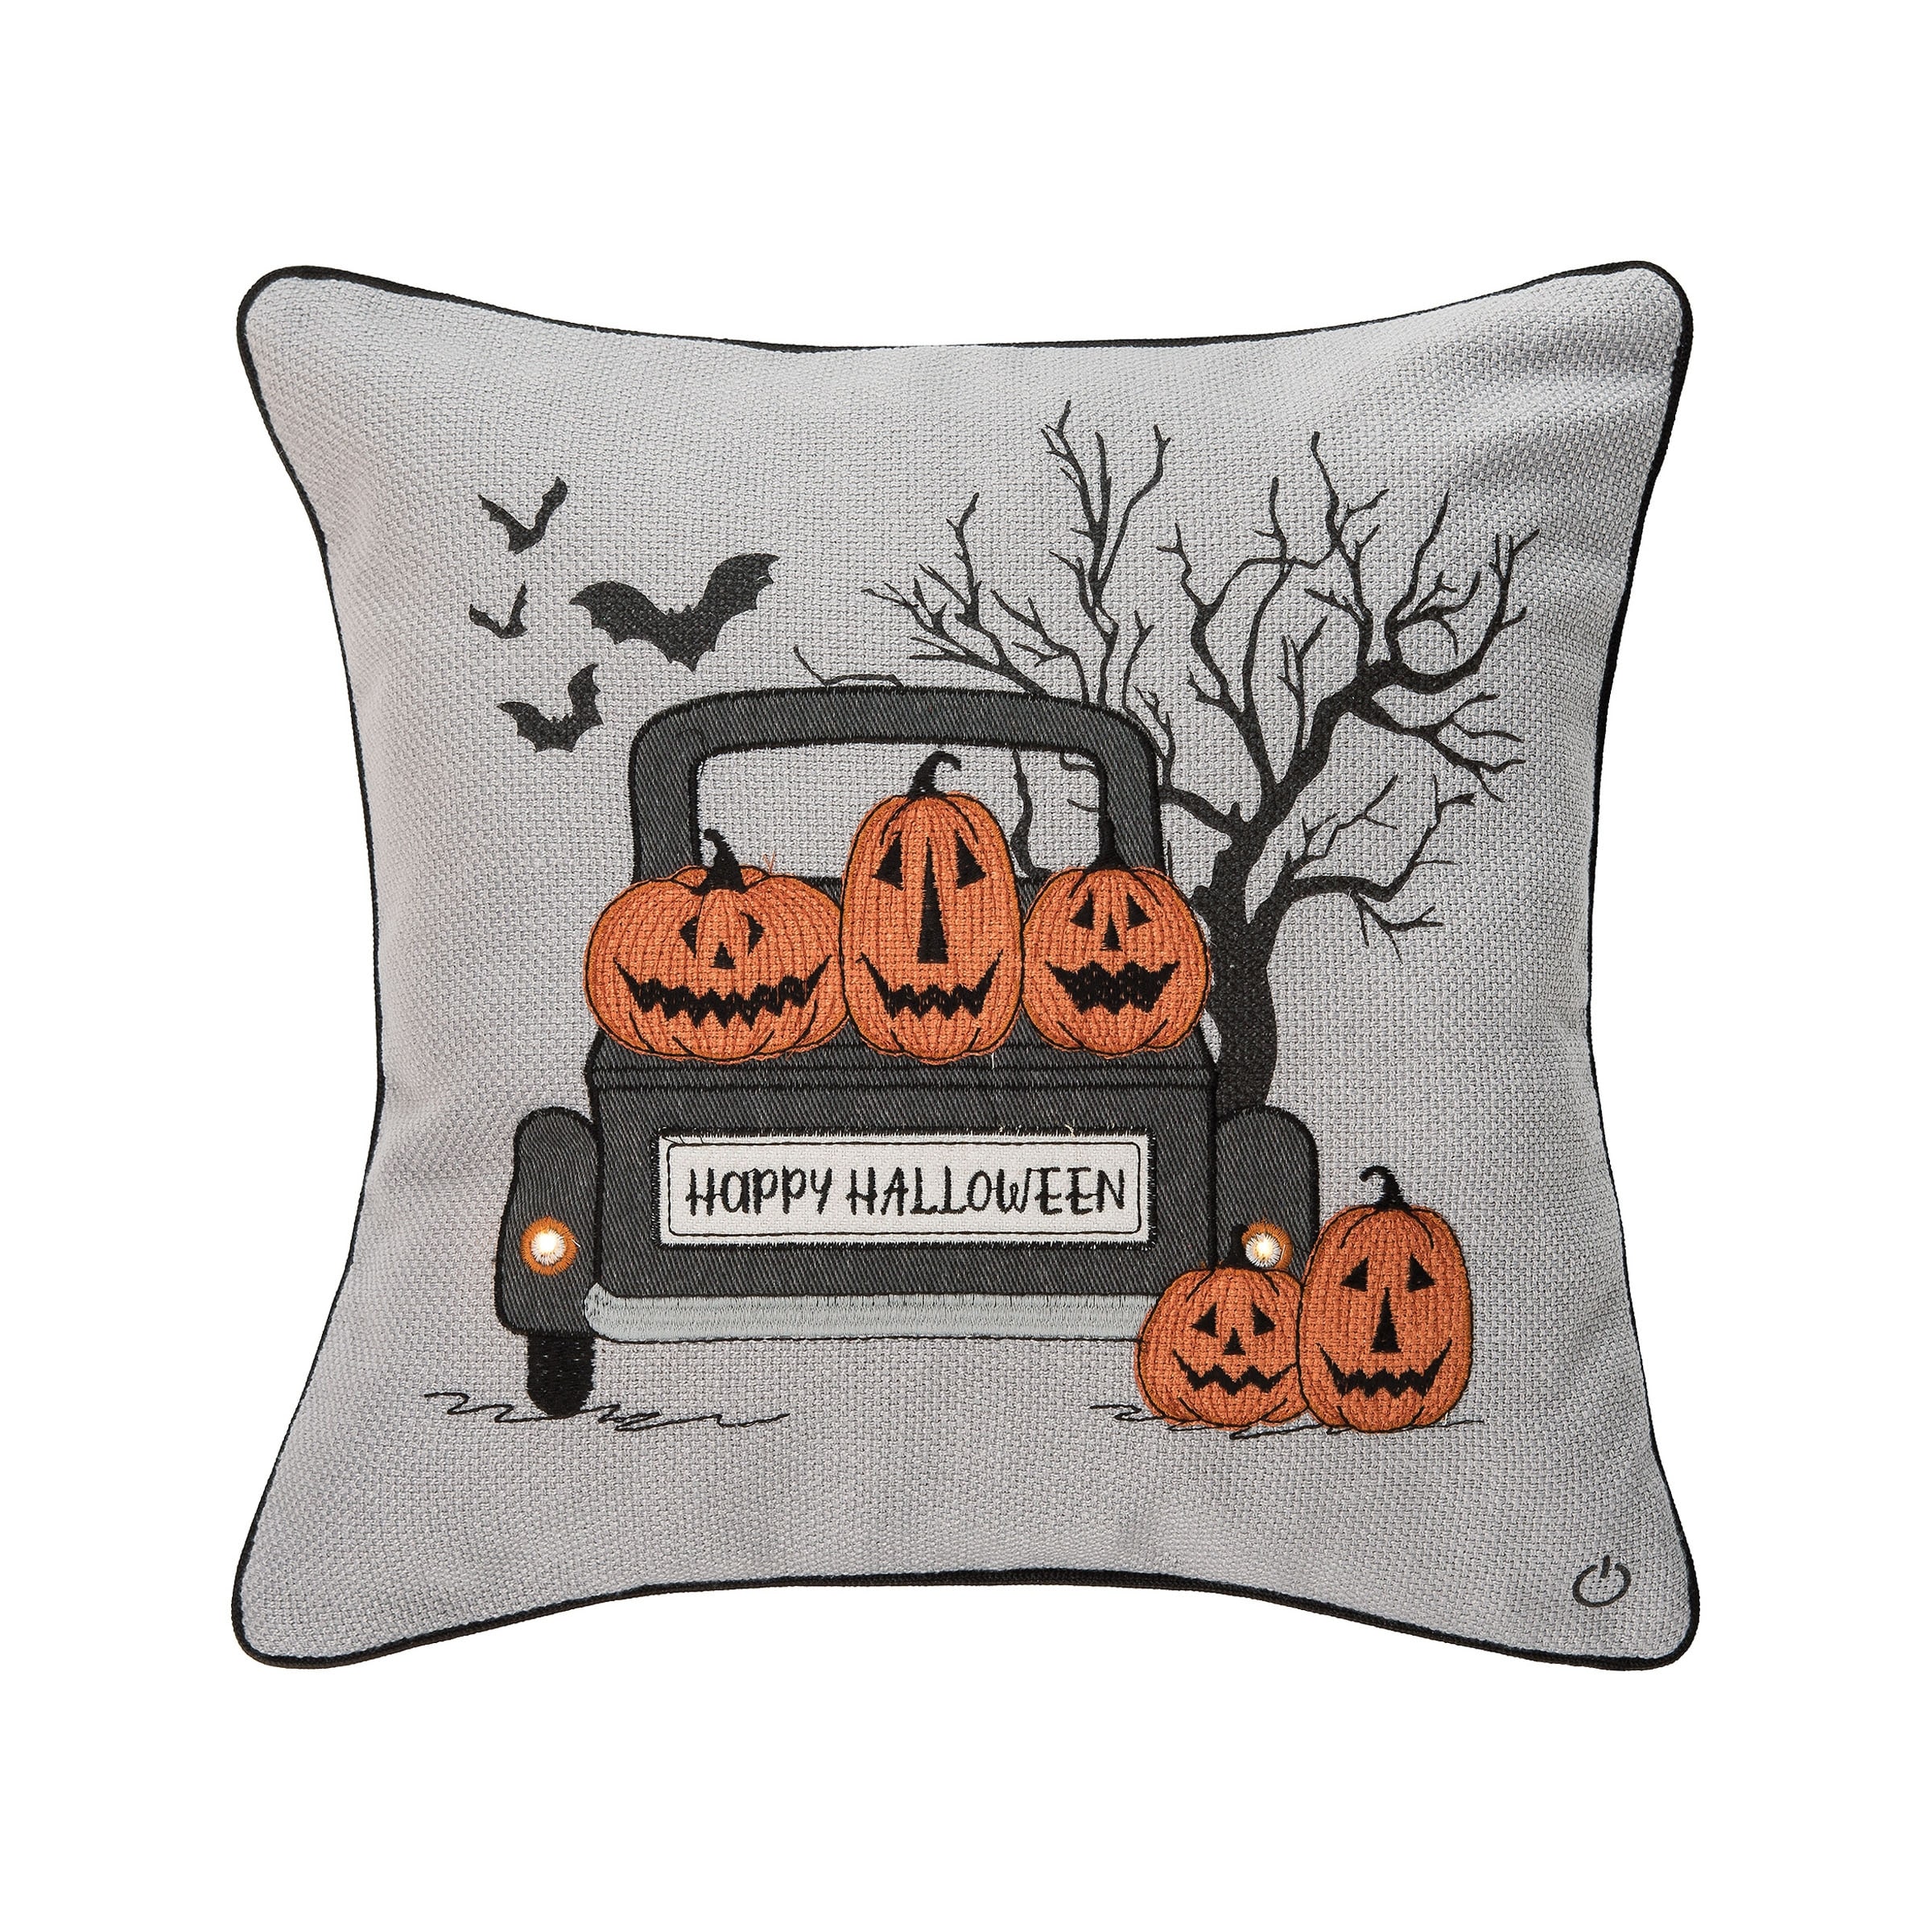 C&F Home 8 x 8 Jack-O-Lantern Petite Hooked Halloween Throw Pillow